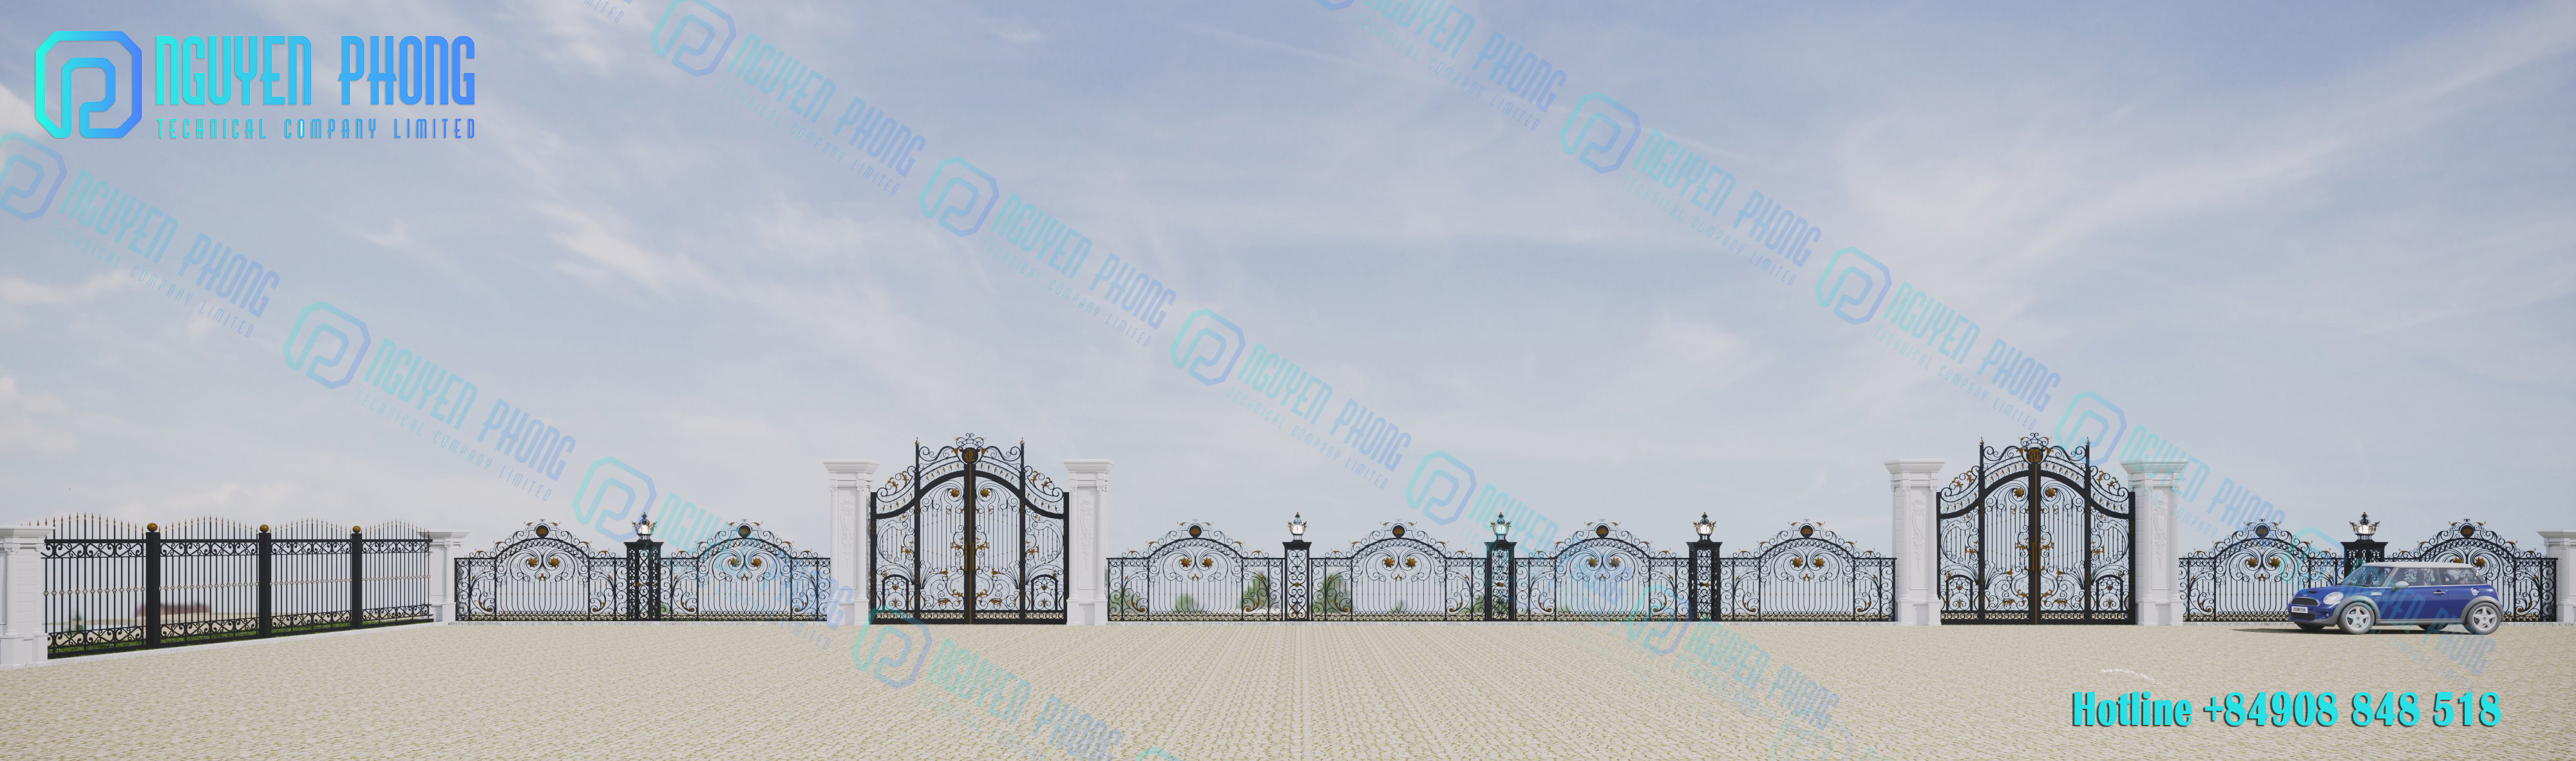 iron-gate-design-wrought-iron-gate-wrought-iron-fence-garden-fence-metal-fence.jpg